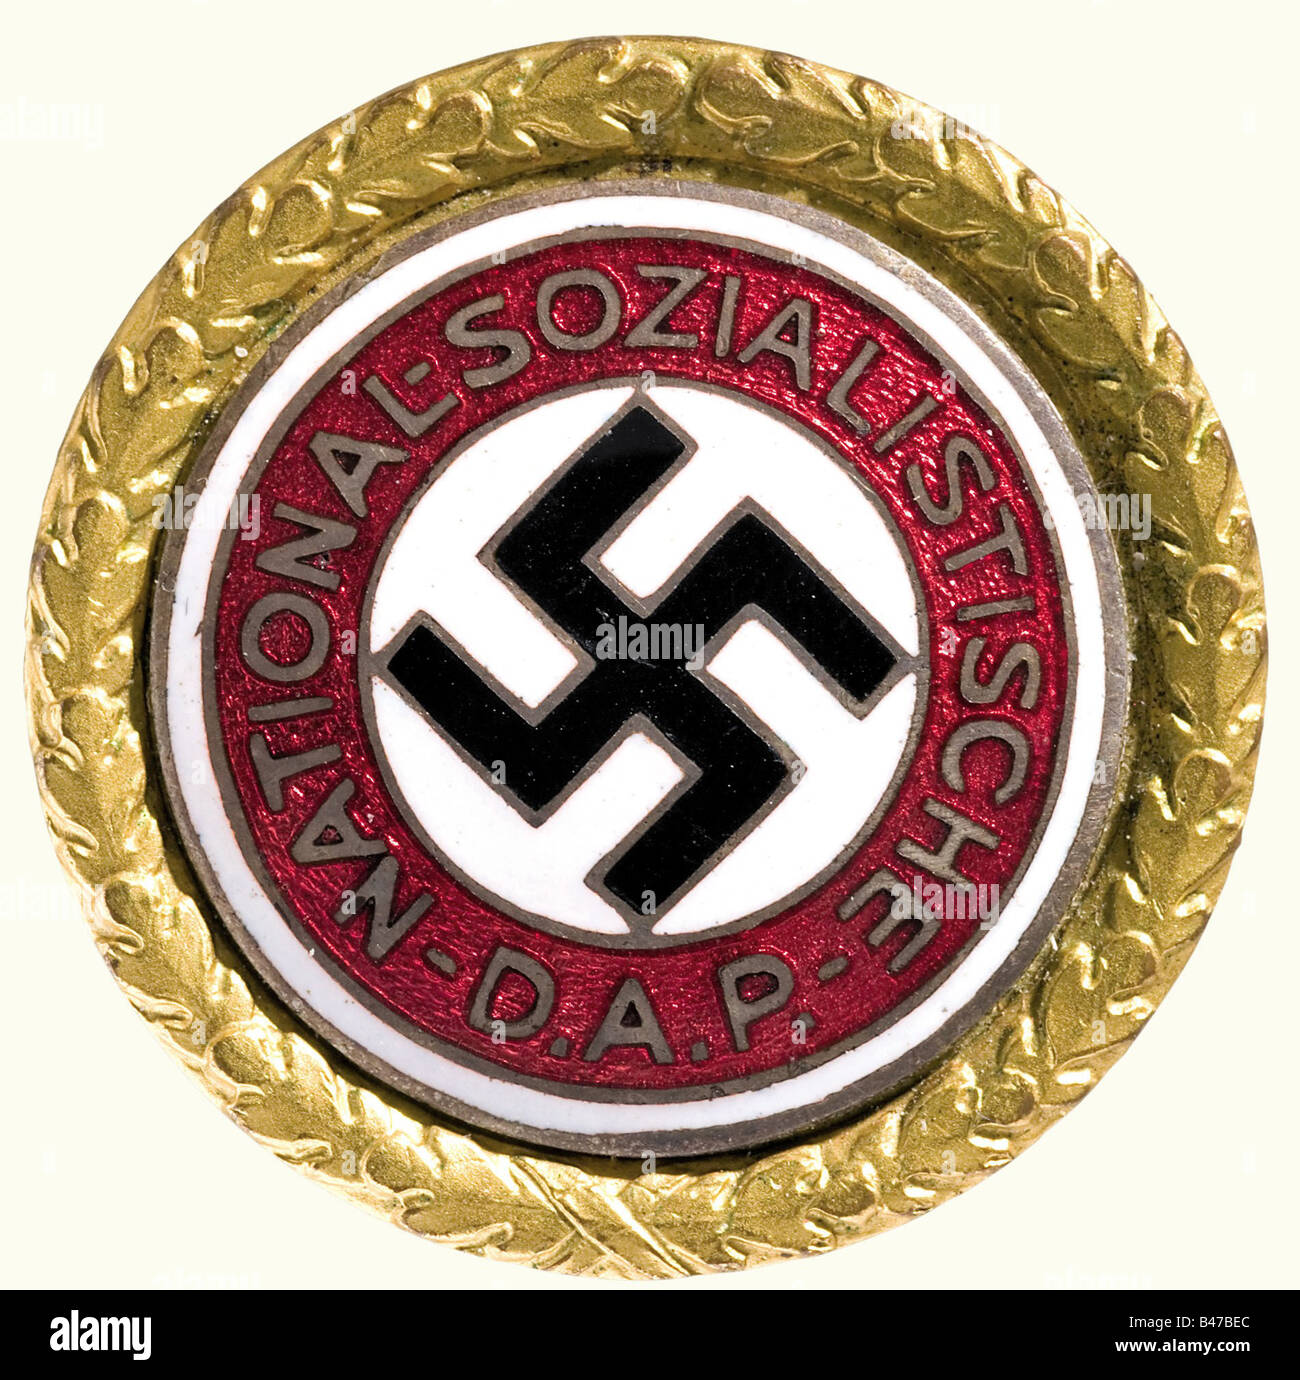 Symbol Of The Nazi Party Stockfotos und -bilder Kaufen - Alamy